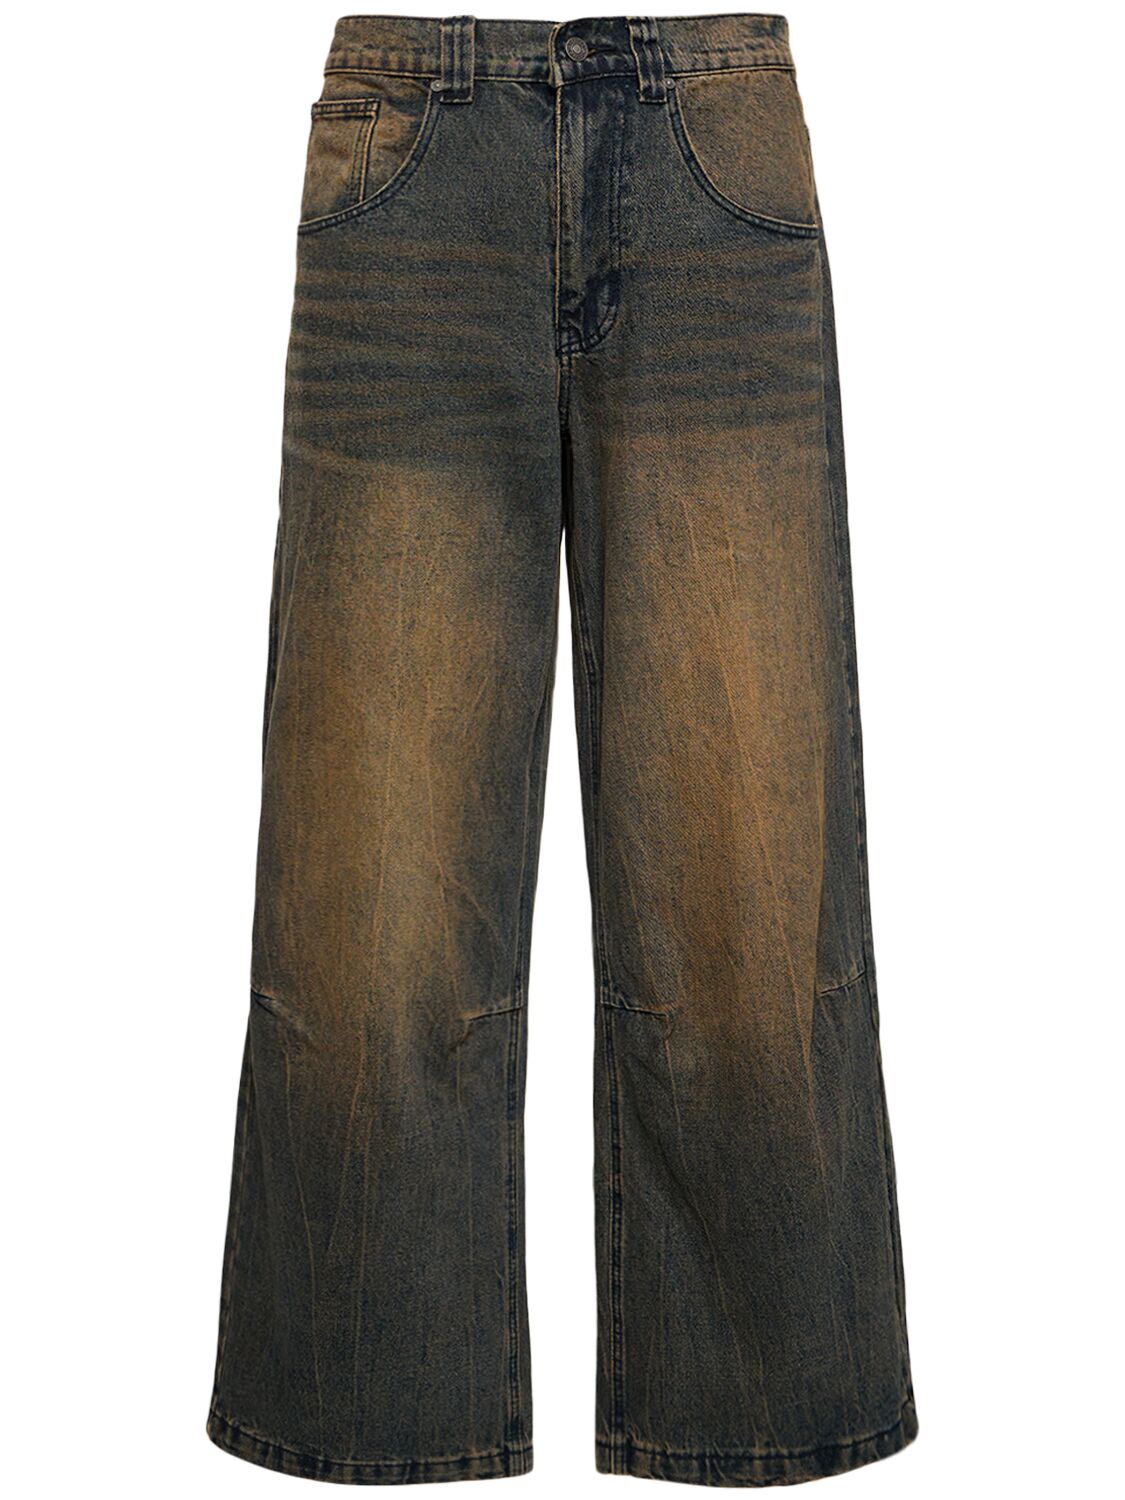 Image of Colossus Dirty Sandblast Jeans